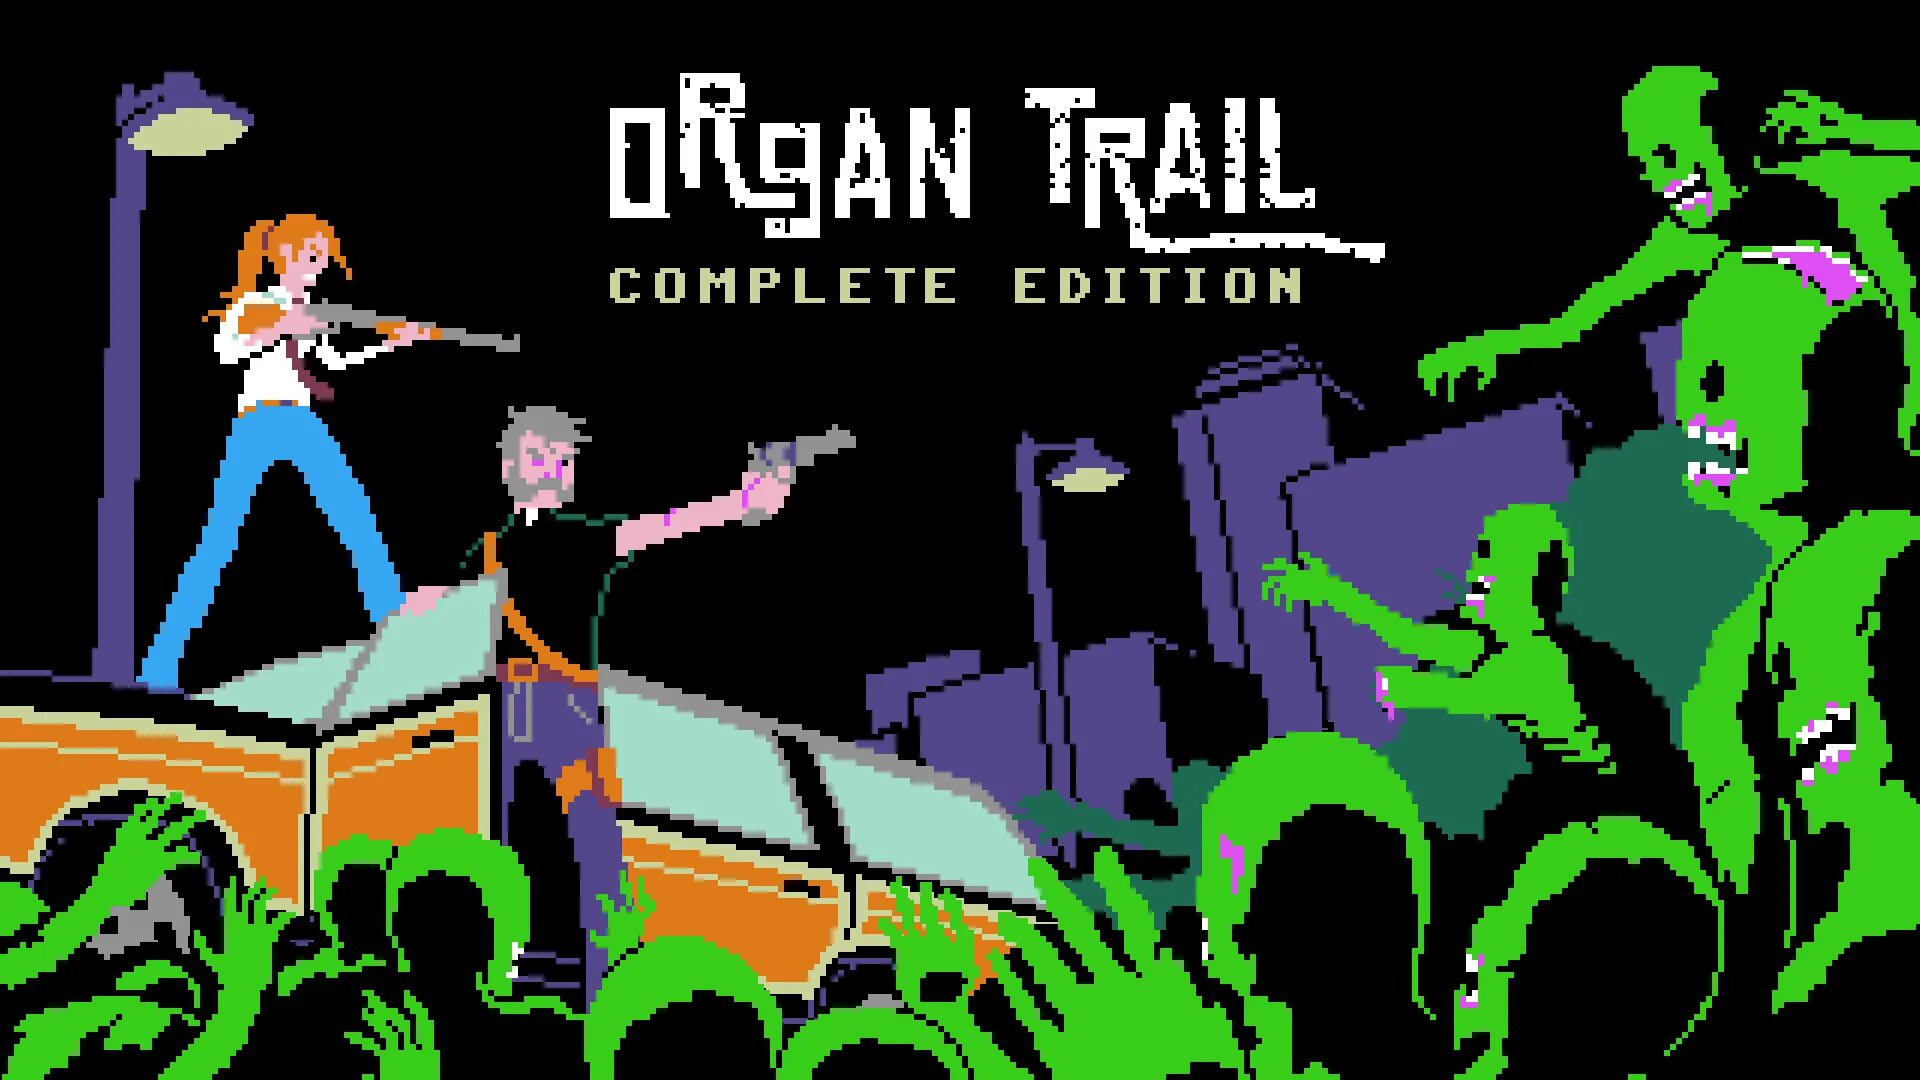 Organ trail. The Organ Trail. Organ Trail: Director's Cut. Organ Trail complete Edition PS Vita. Guy from USA, Organ Trail.